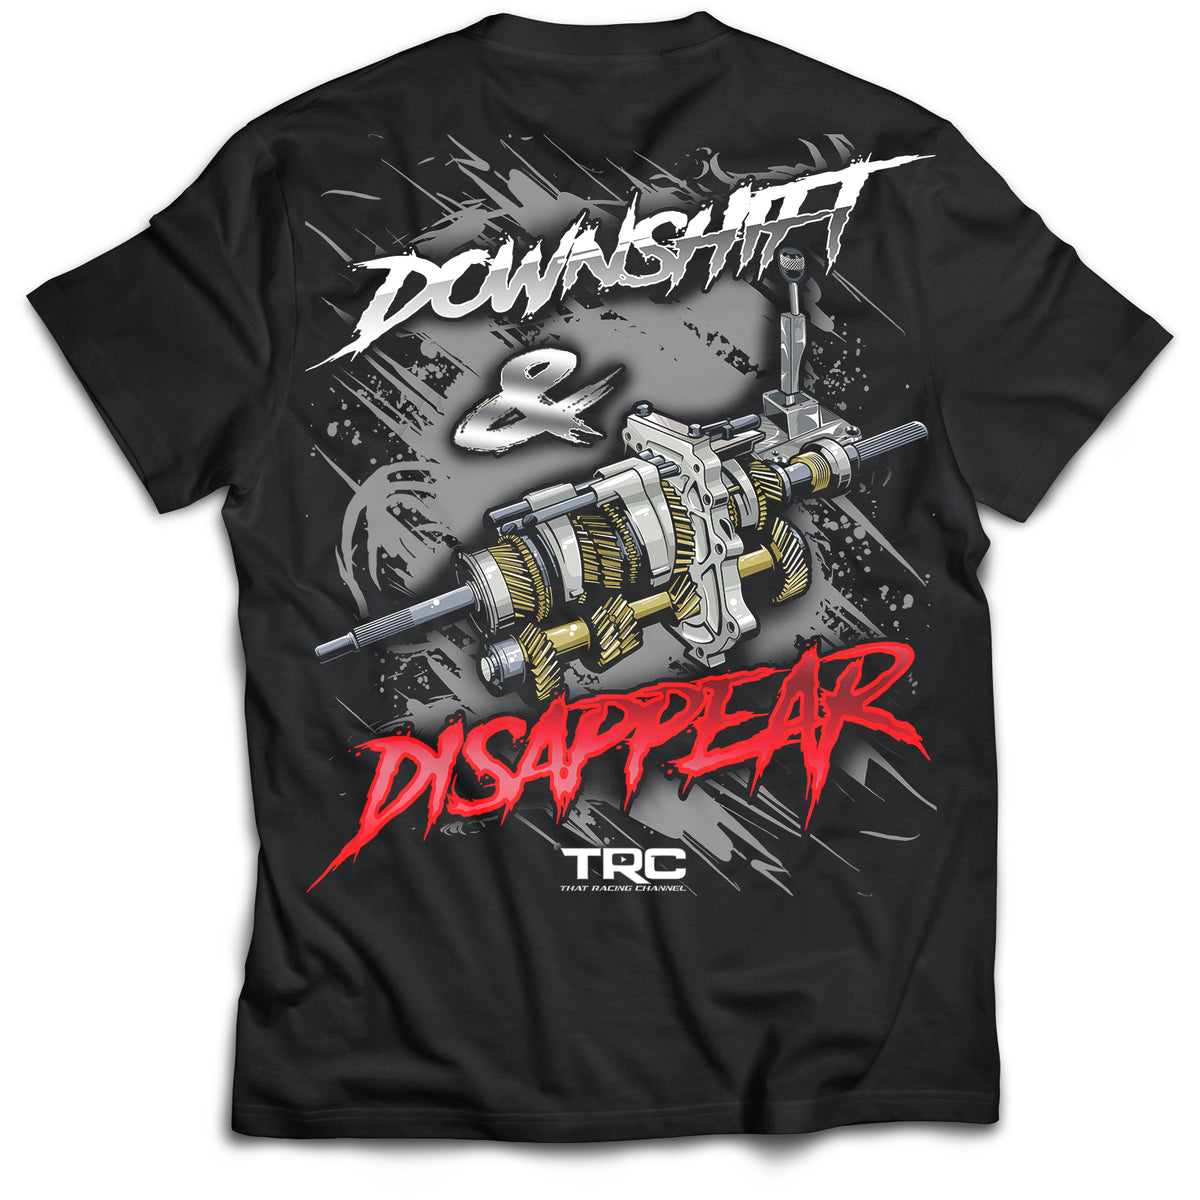 Downshift & Disappear T-Shirt